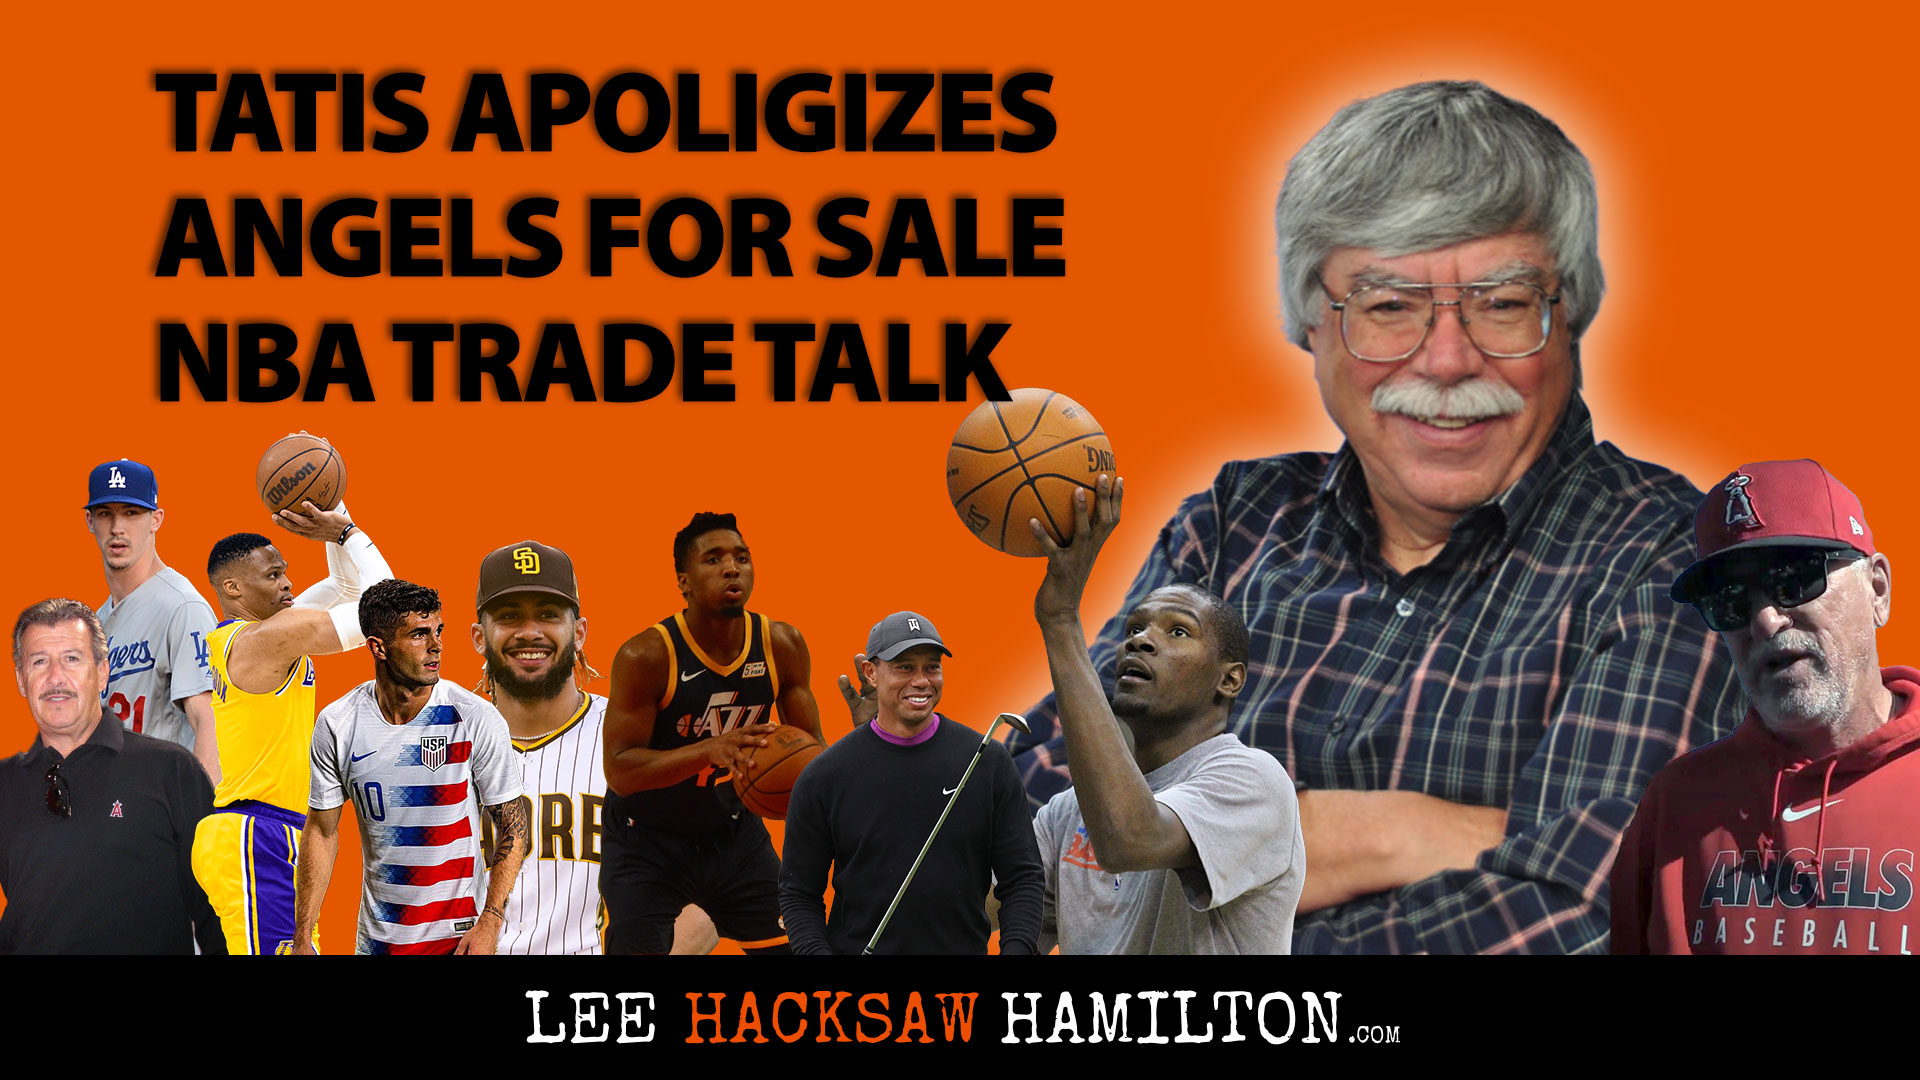 Lee Hacksaw Hamilton, Tatis apologizes, Angels for Sale, NBA Trade Talk